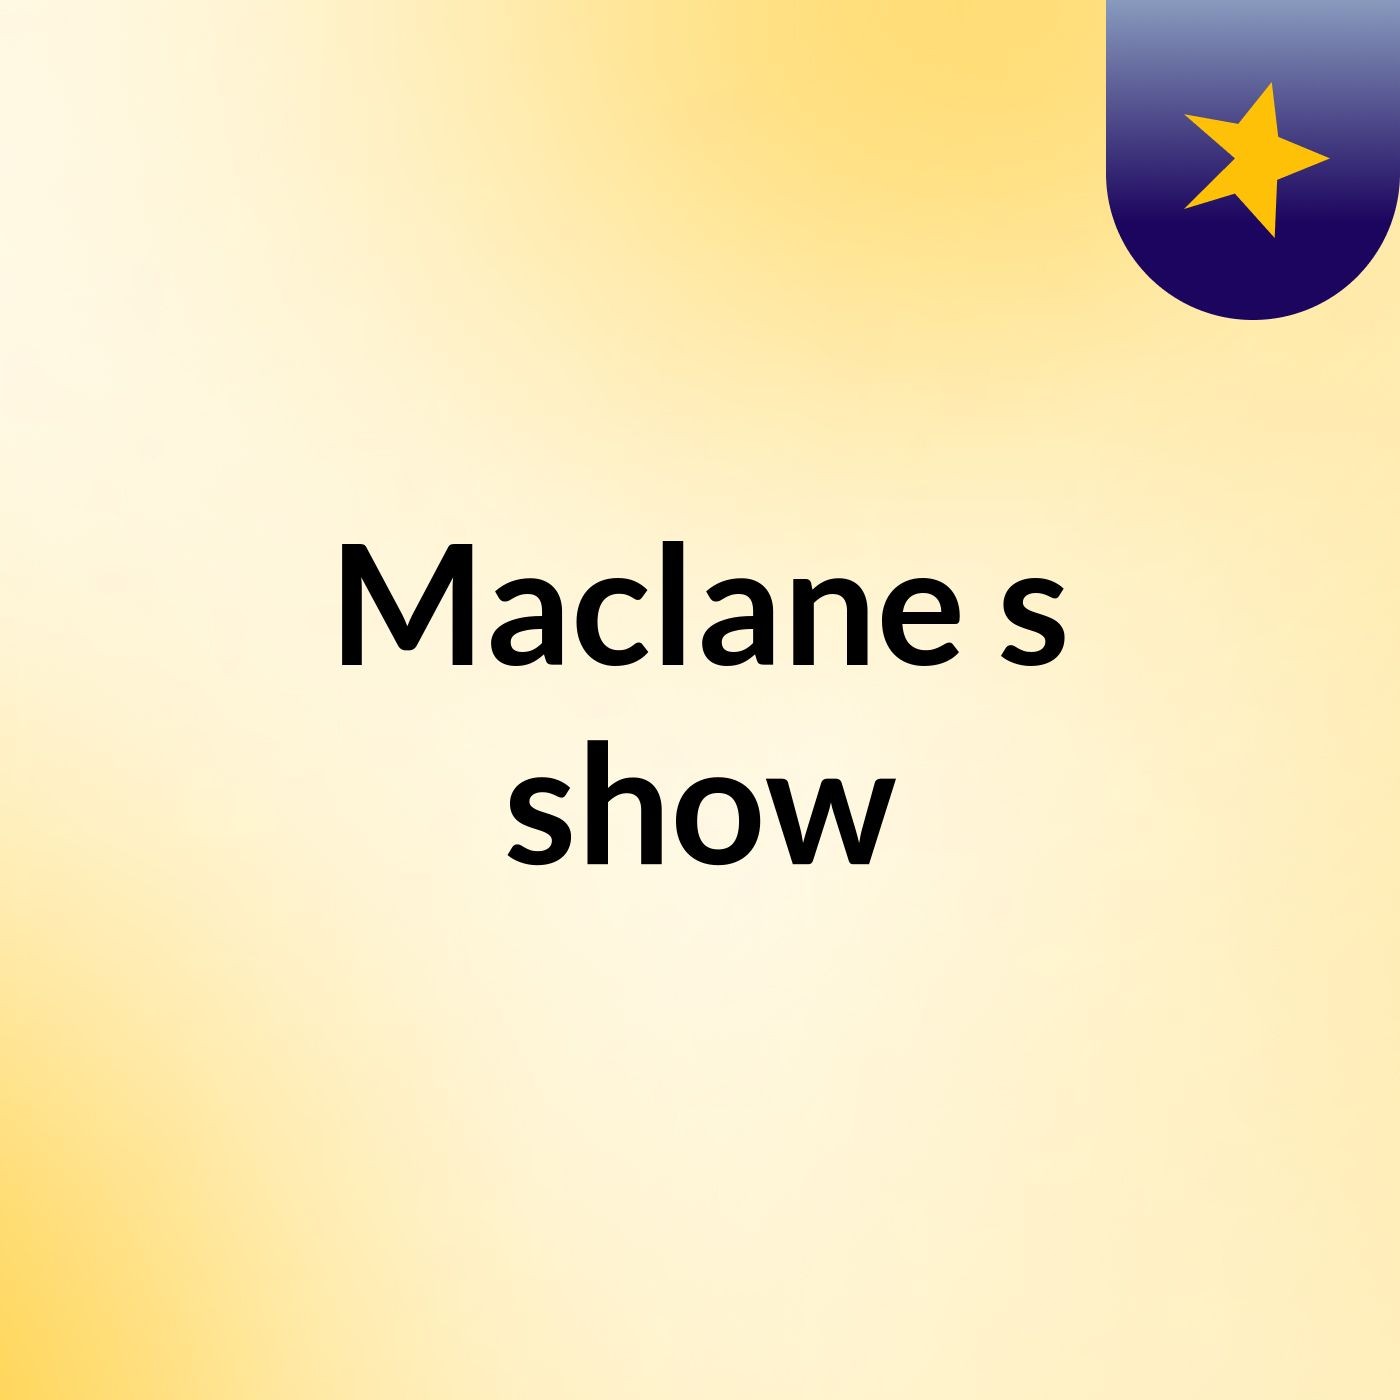 Maclane's show